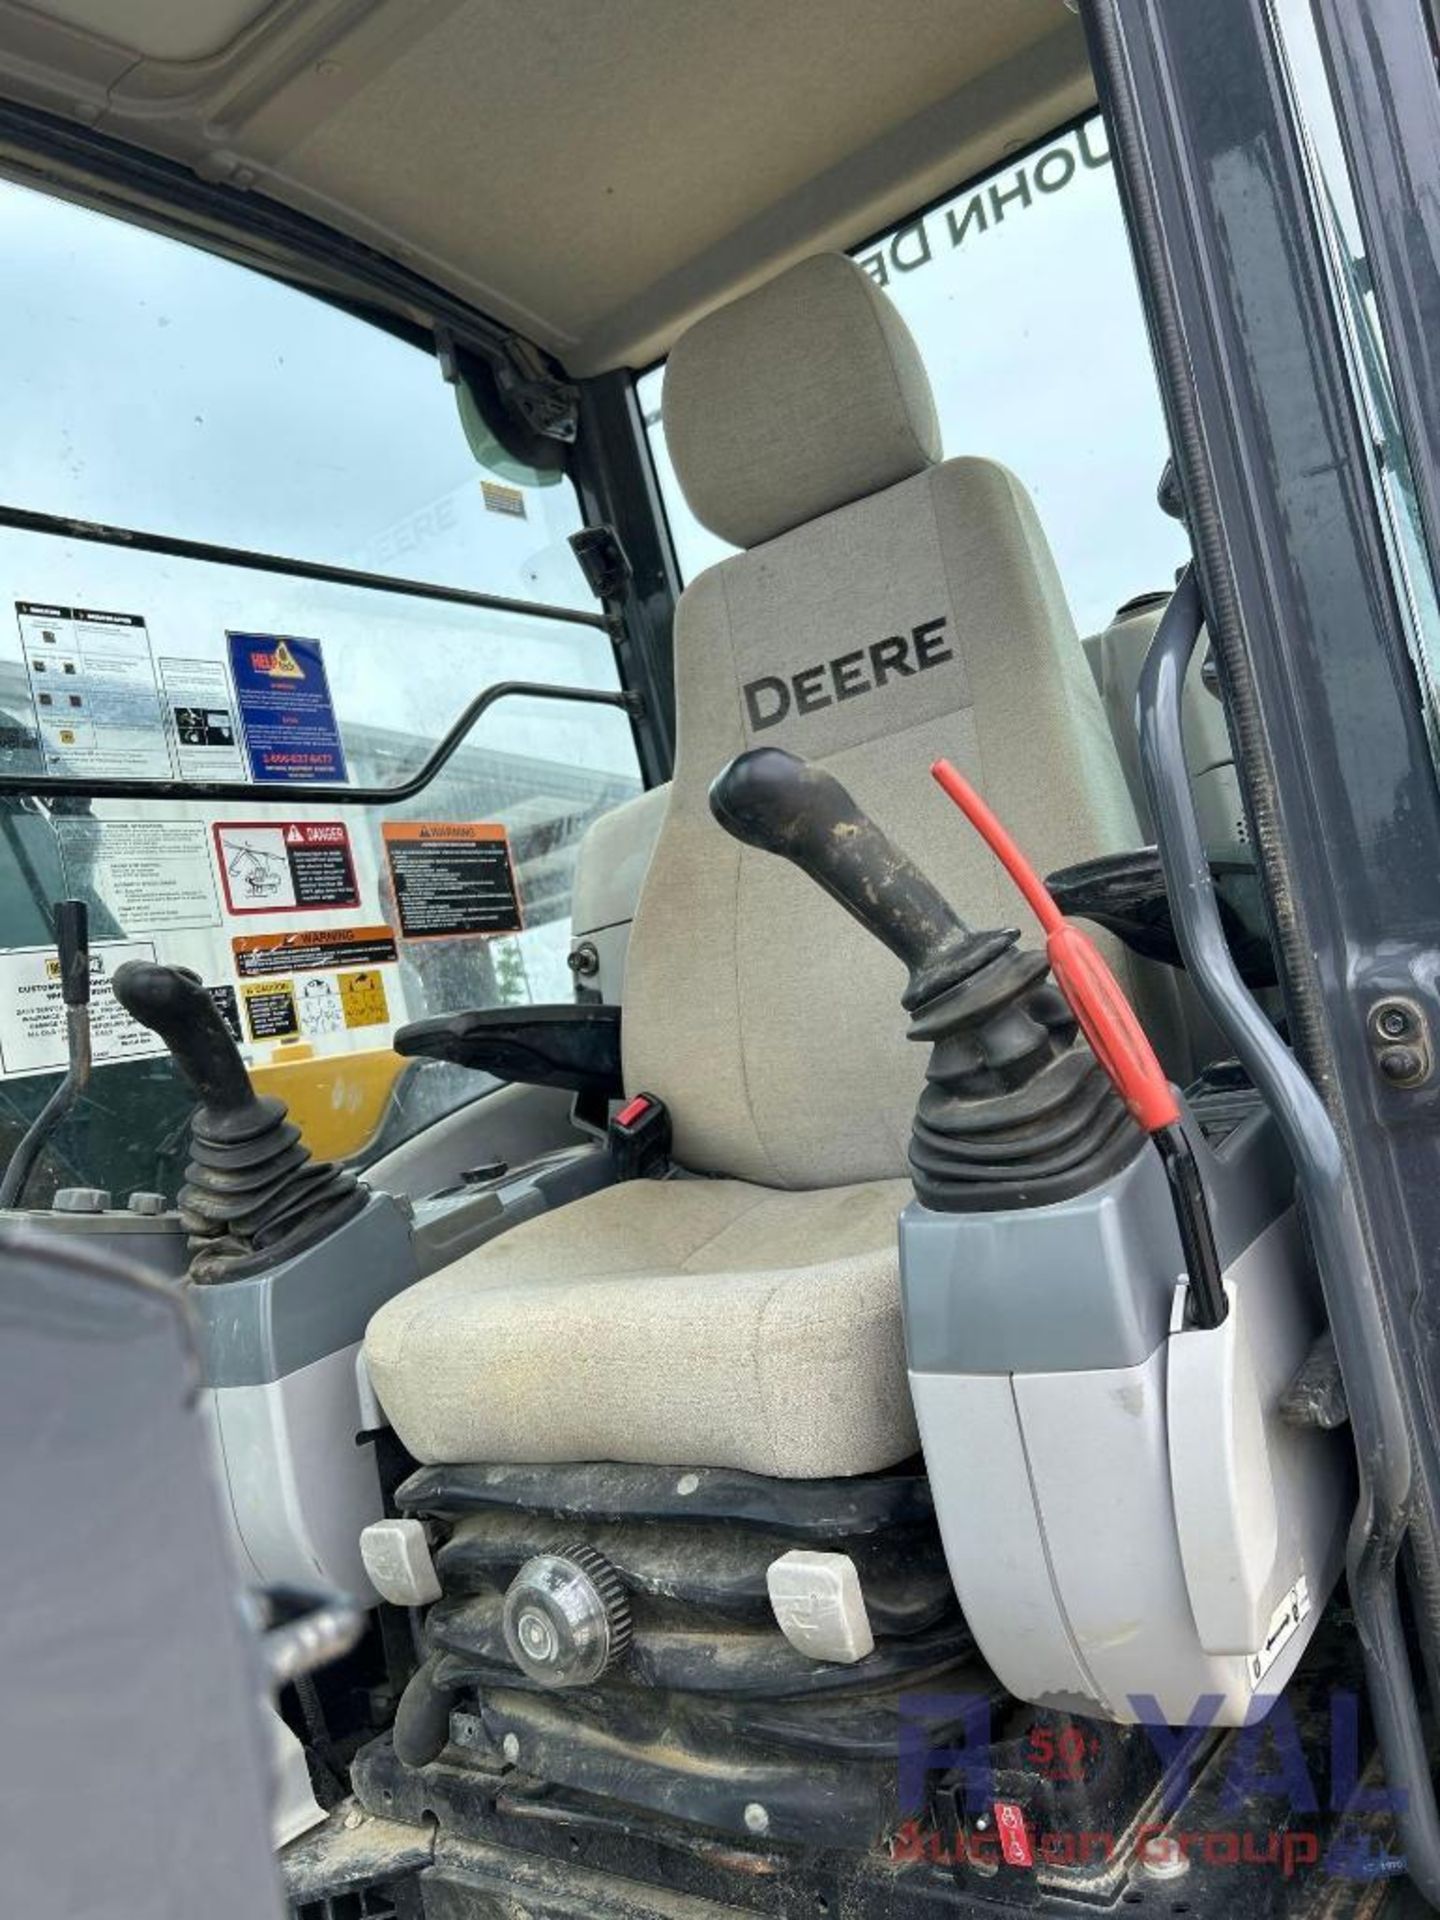 2018 John Deere 75G Hydraulic Excavator - Image 8 of 47